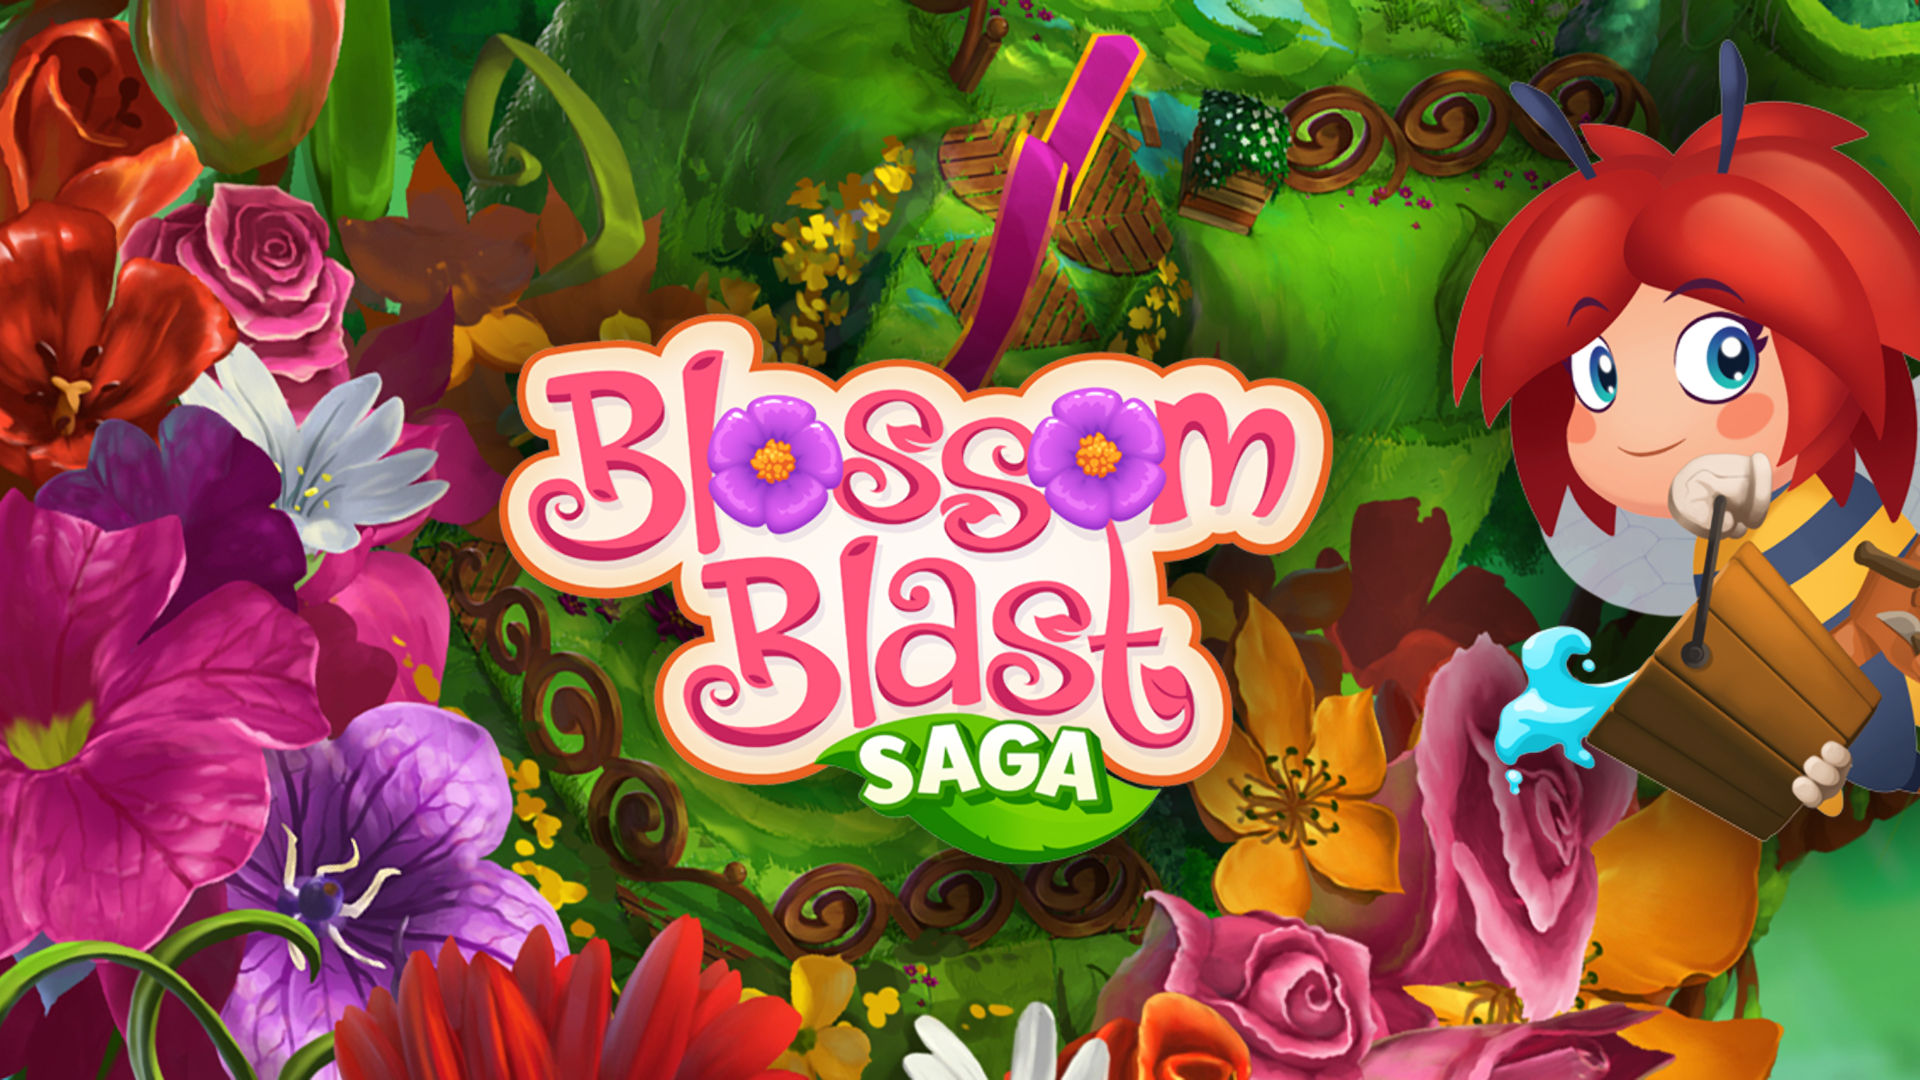 Blossom Blast Saga by King promotional image